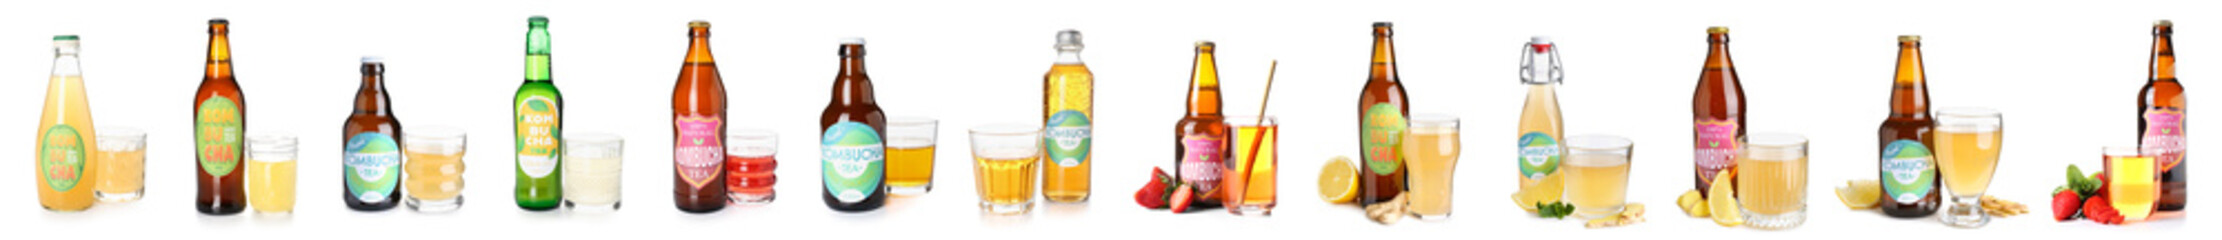  Group of bottles with tasty kombucha drink on white background